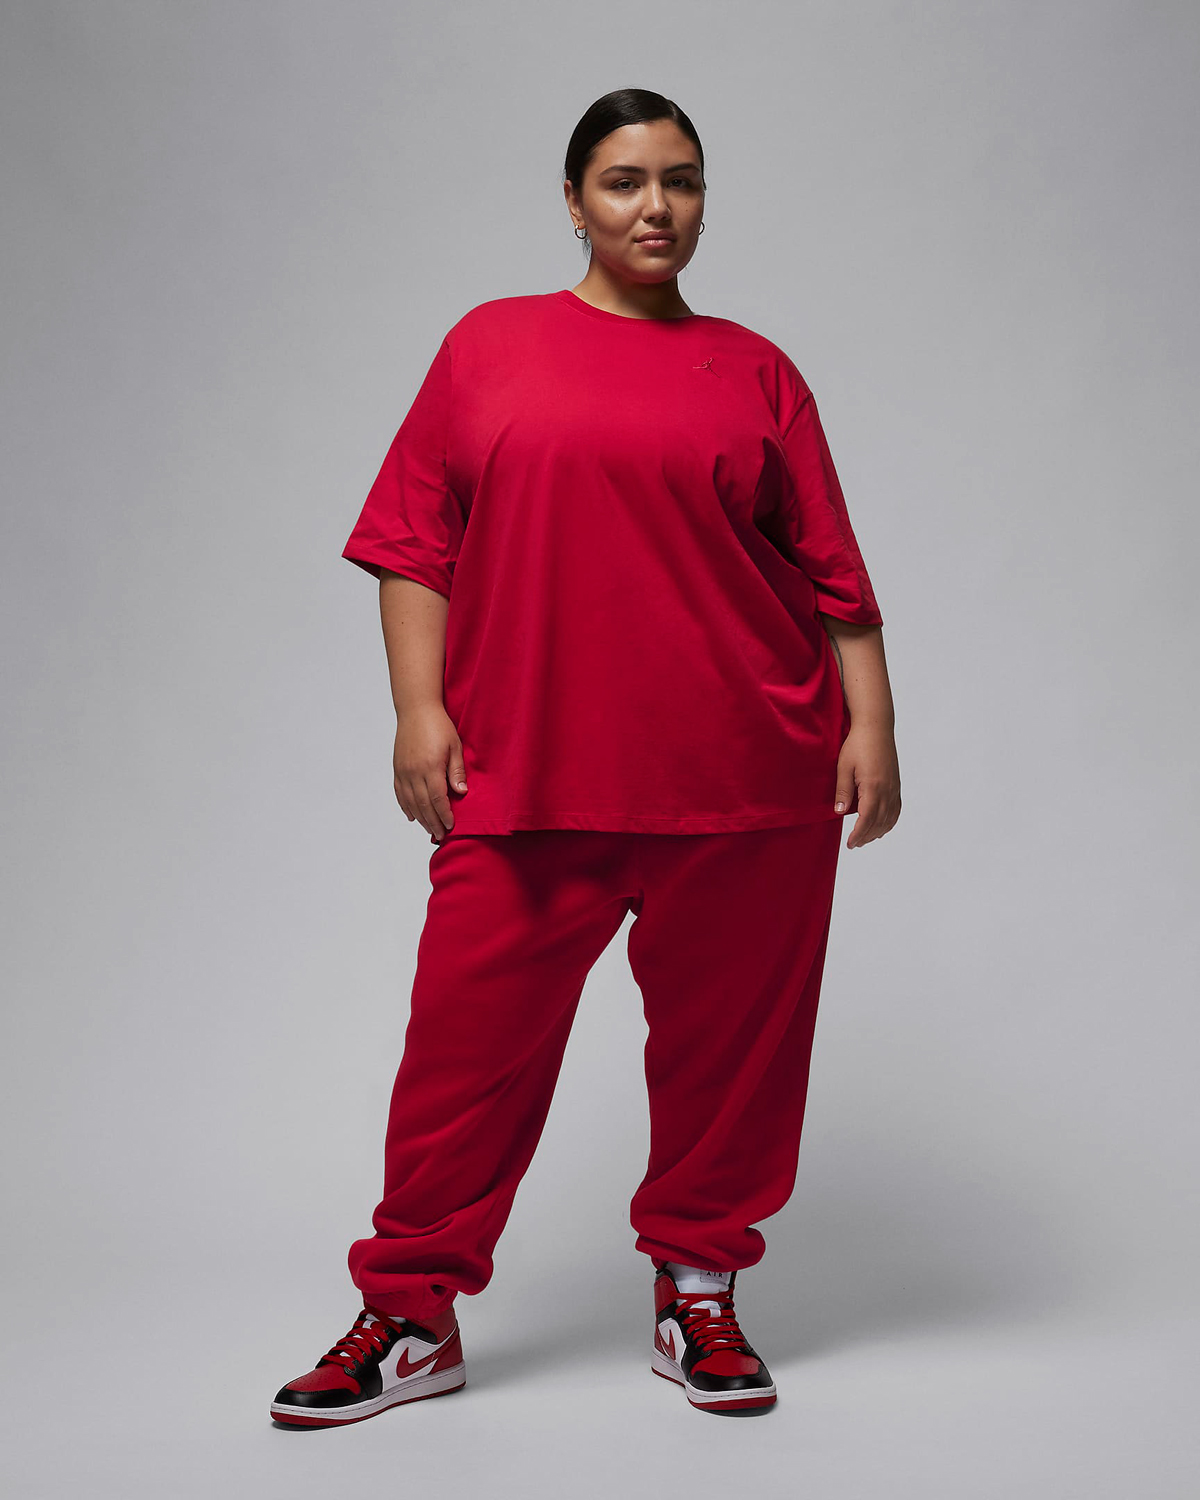 Jordan-Essentials-Womens-Girlfriend-Plus-Size-T-Shirt-Pants-Gym-Red